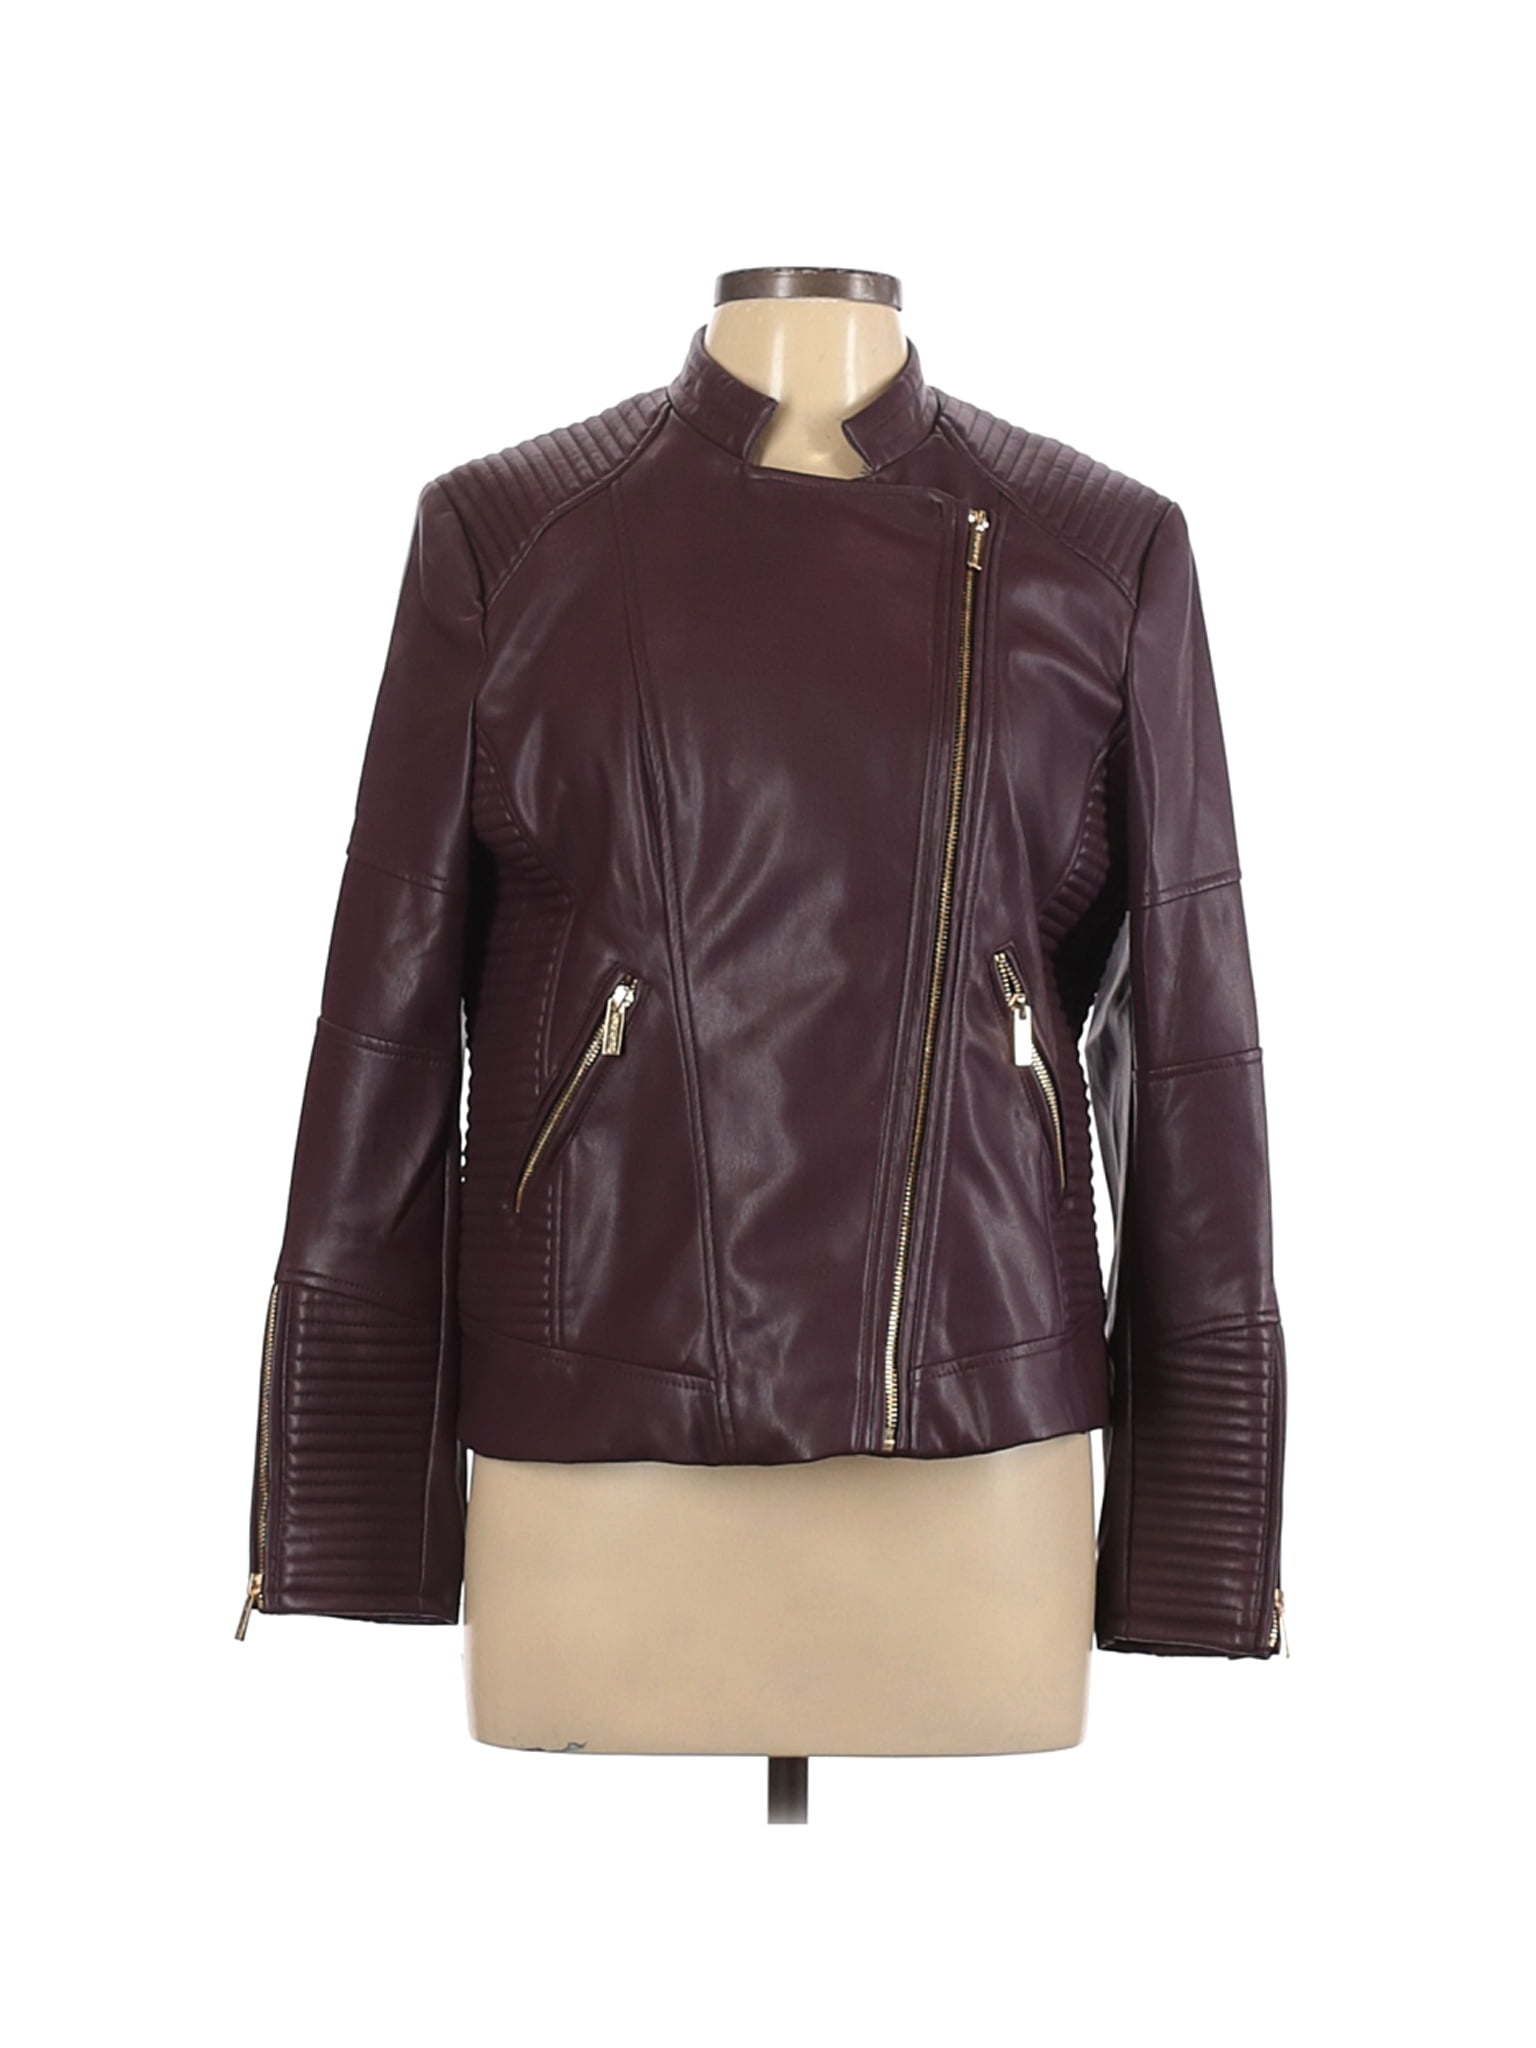 calvin klein leather jacket womens